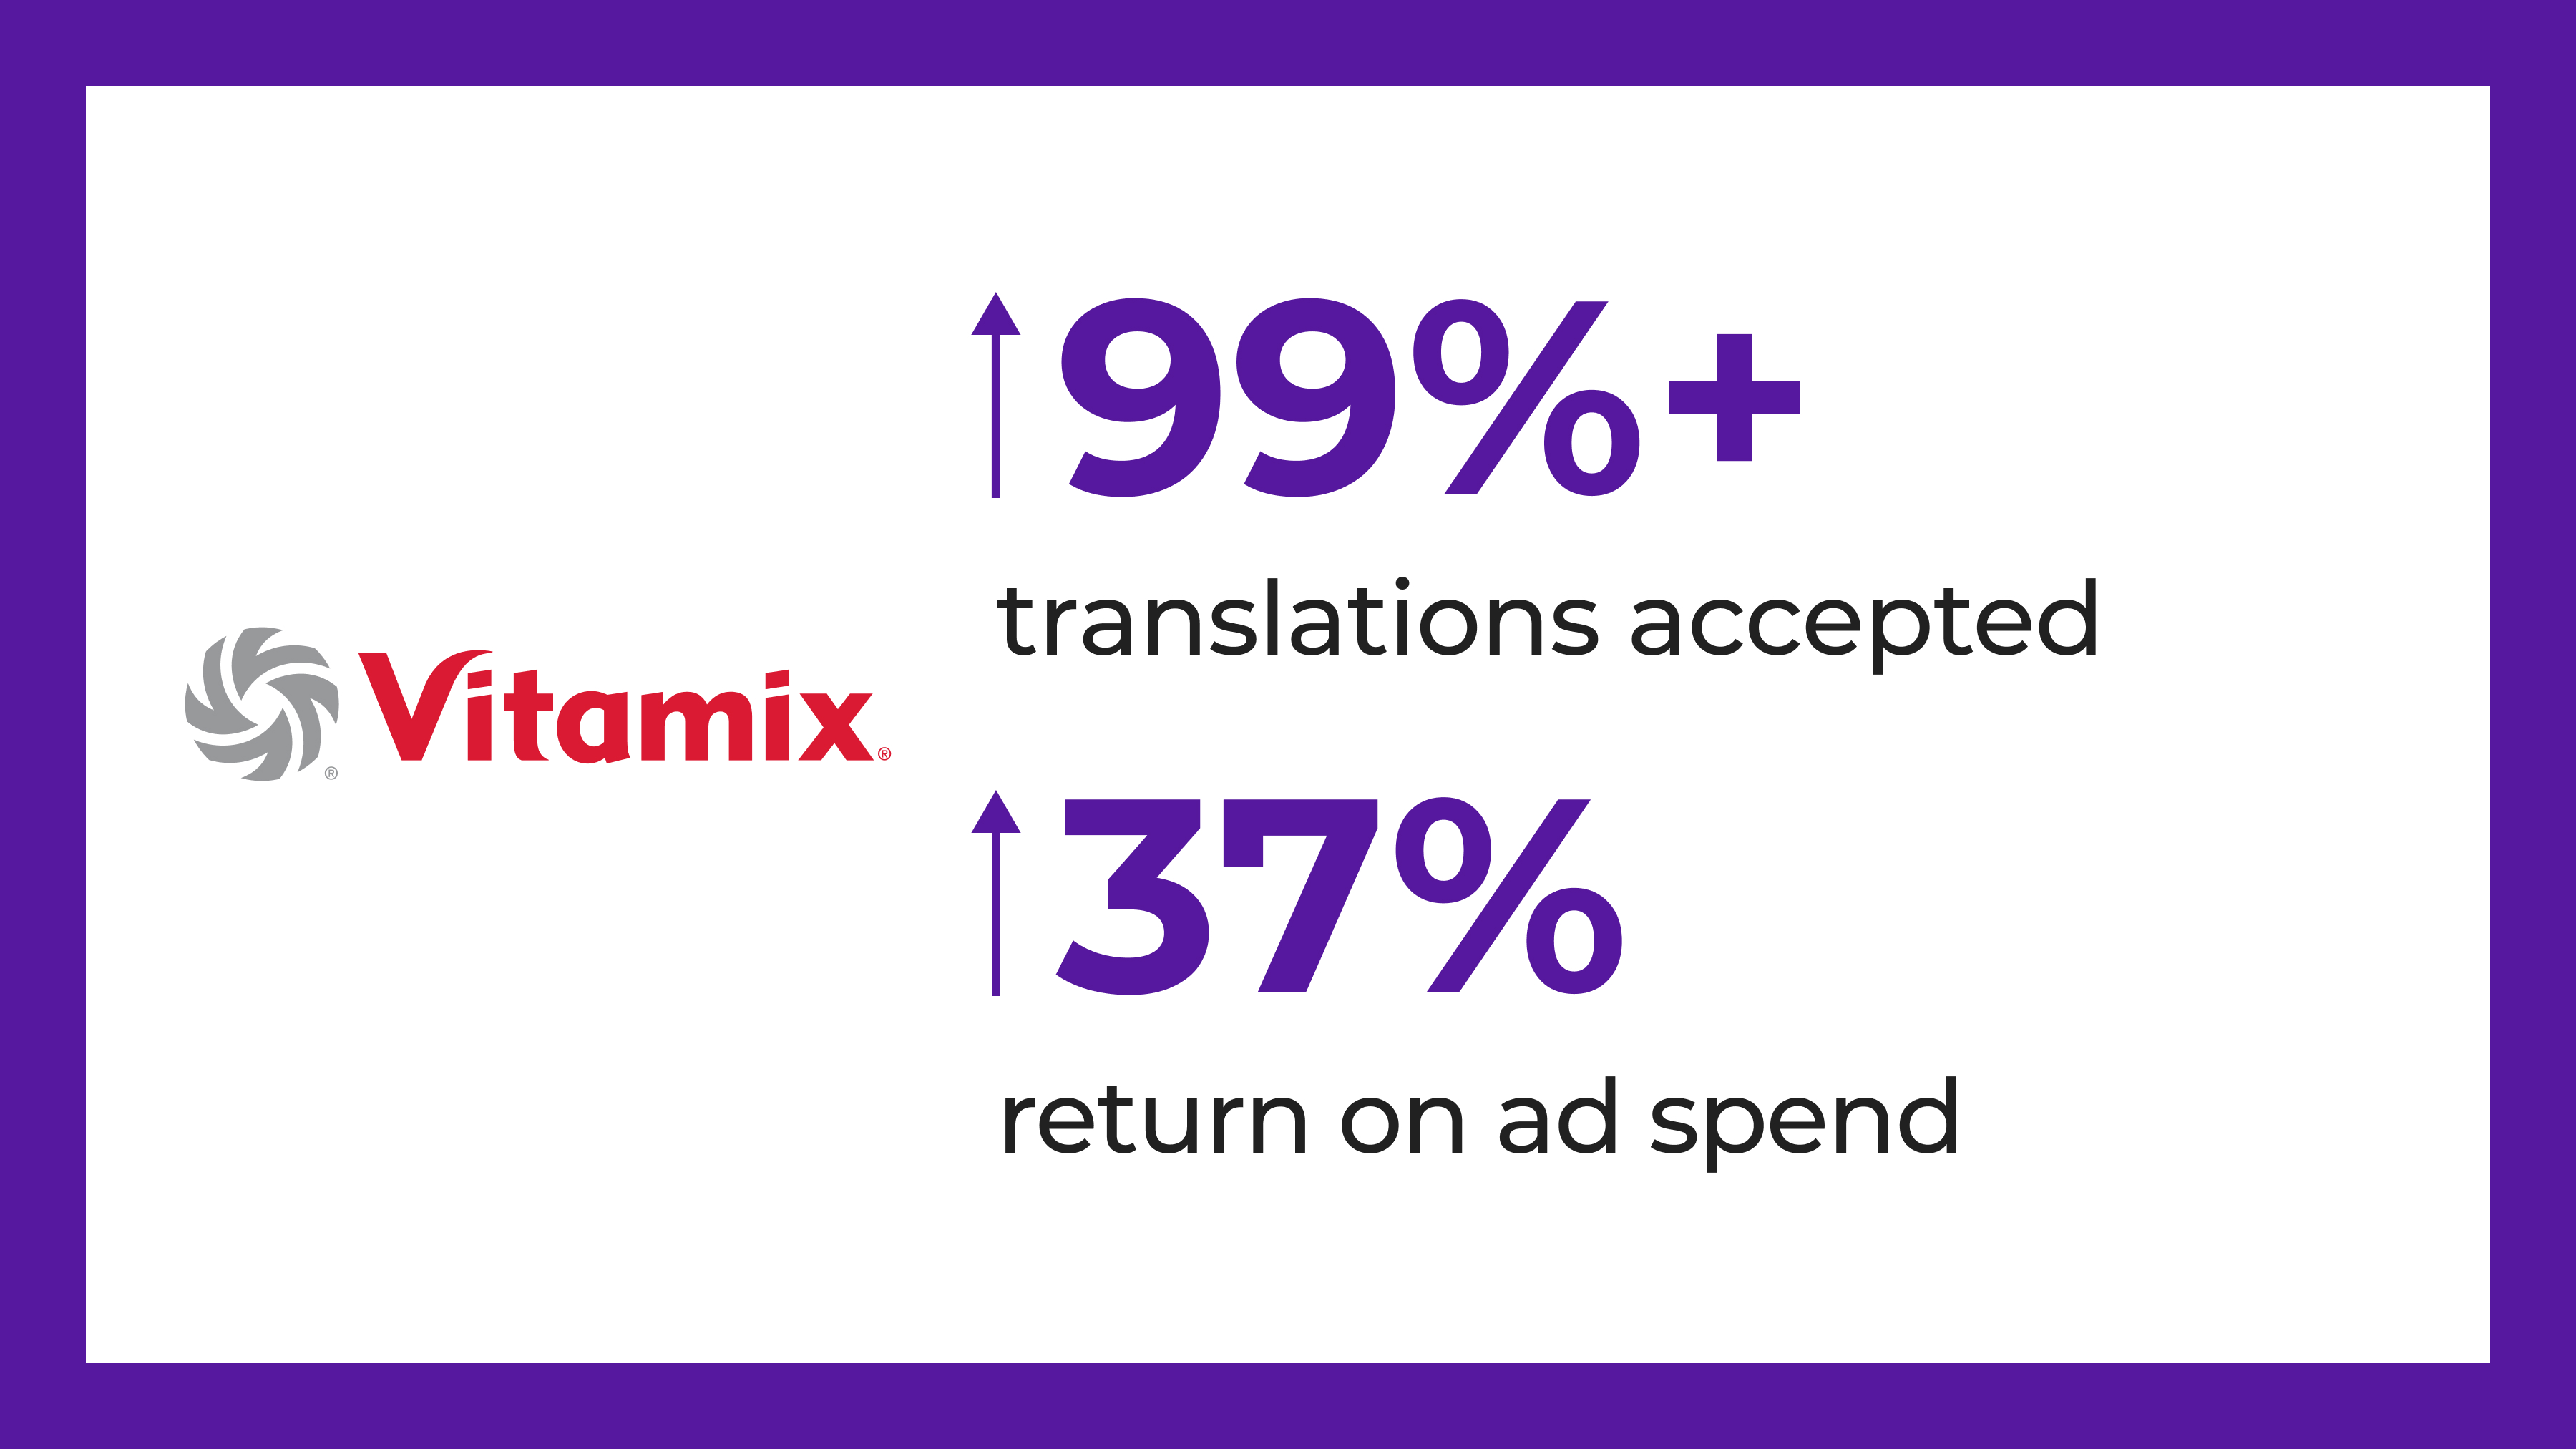 How Vitamix achieved 37% return on ad spend by utilizing Smartling translation management system